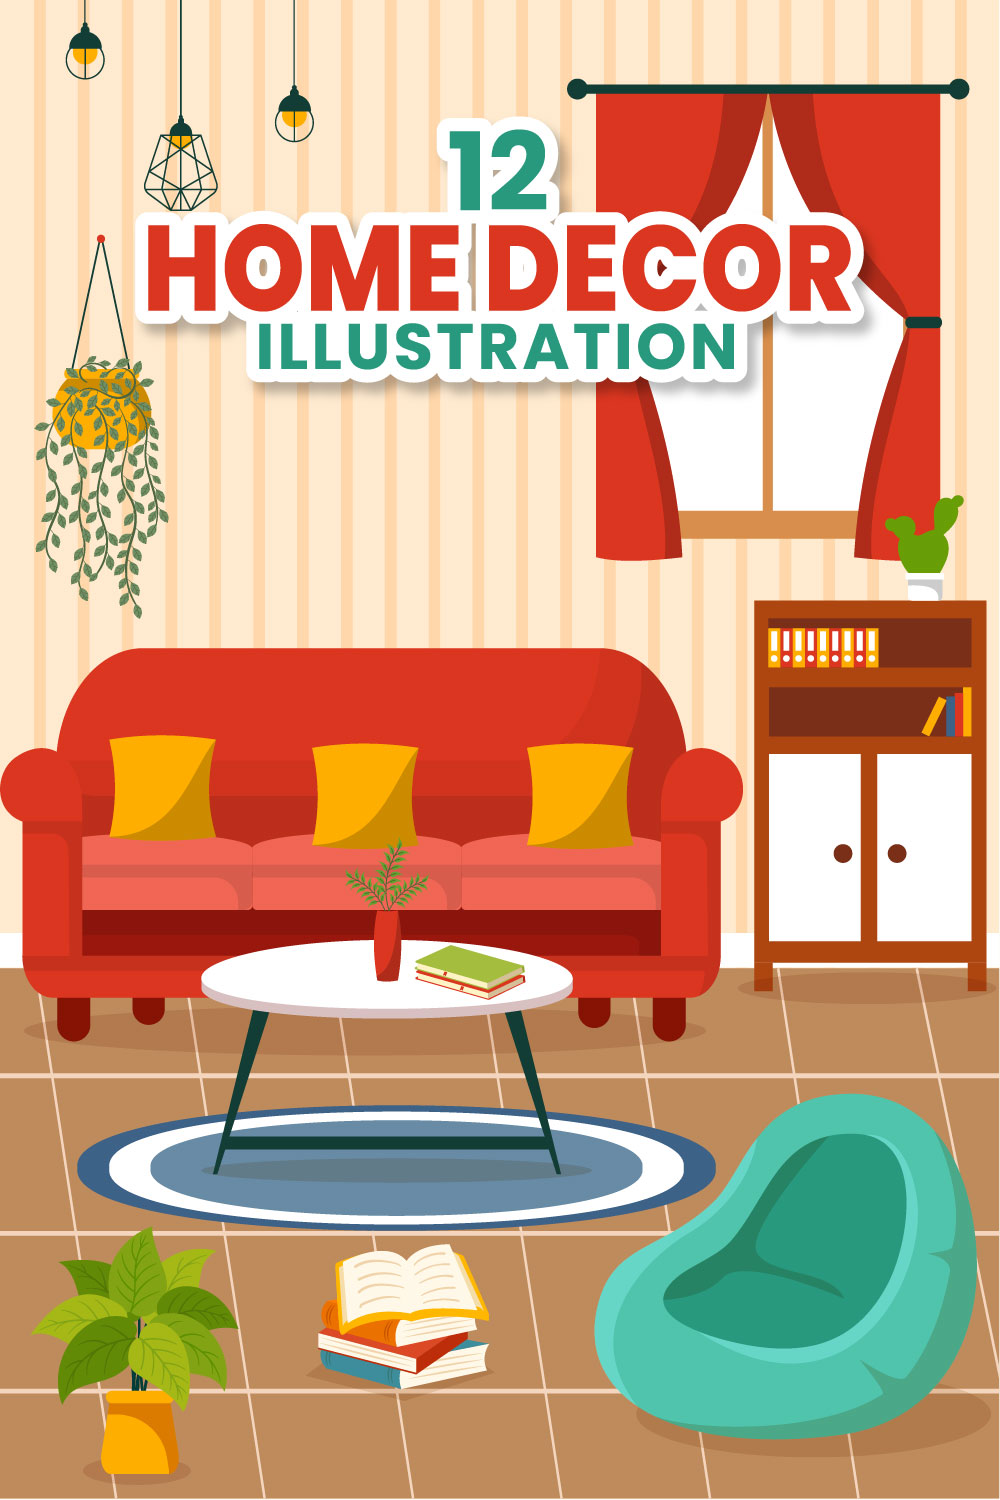 12 Home Decor Illustration pinterest preview image.